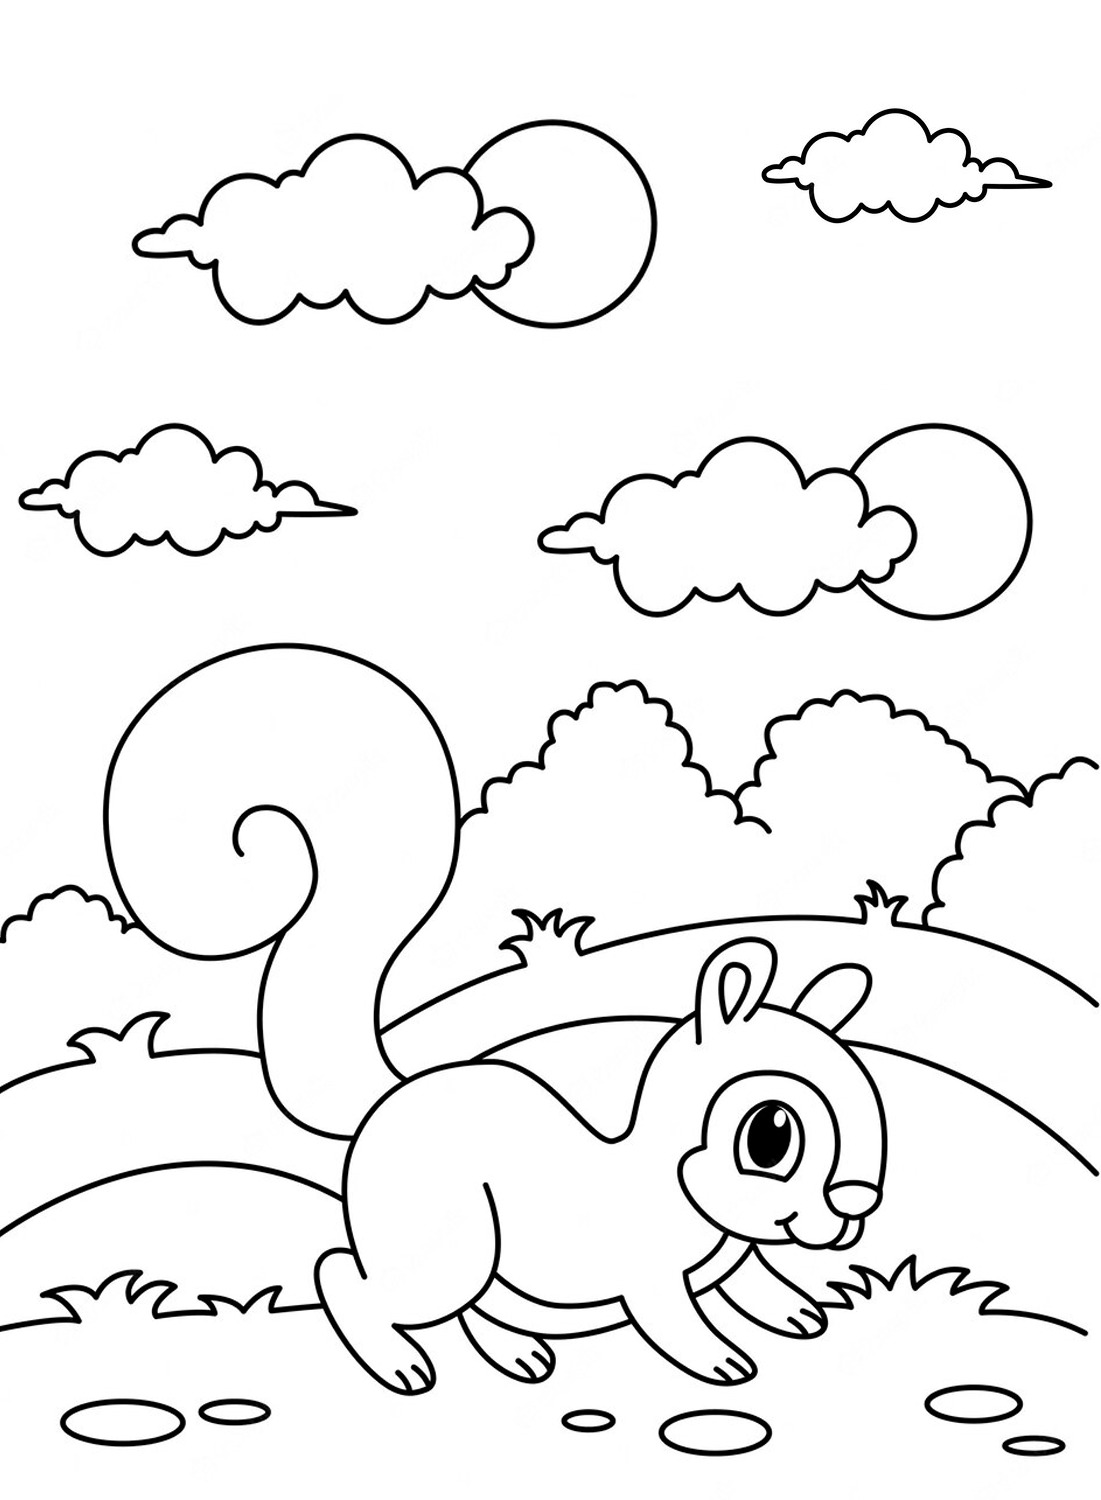 Squirrel coloring page free